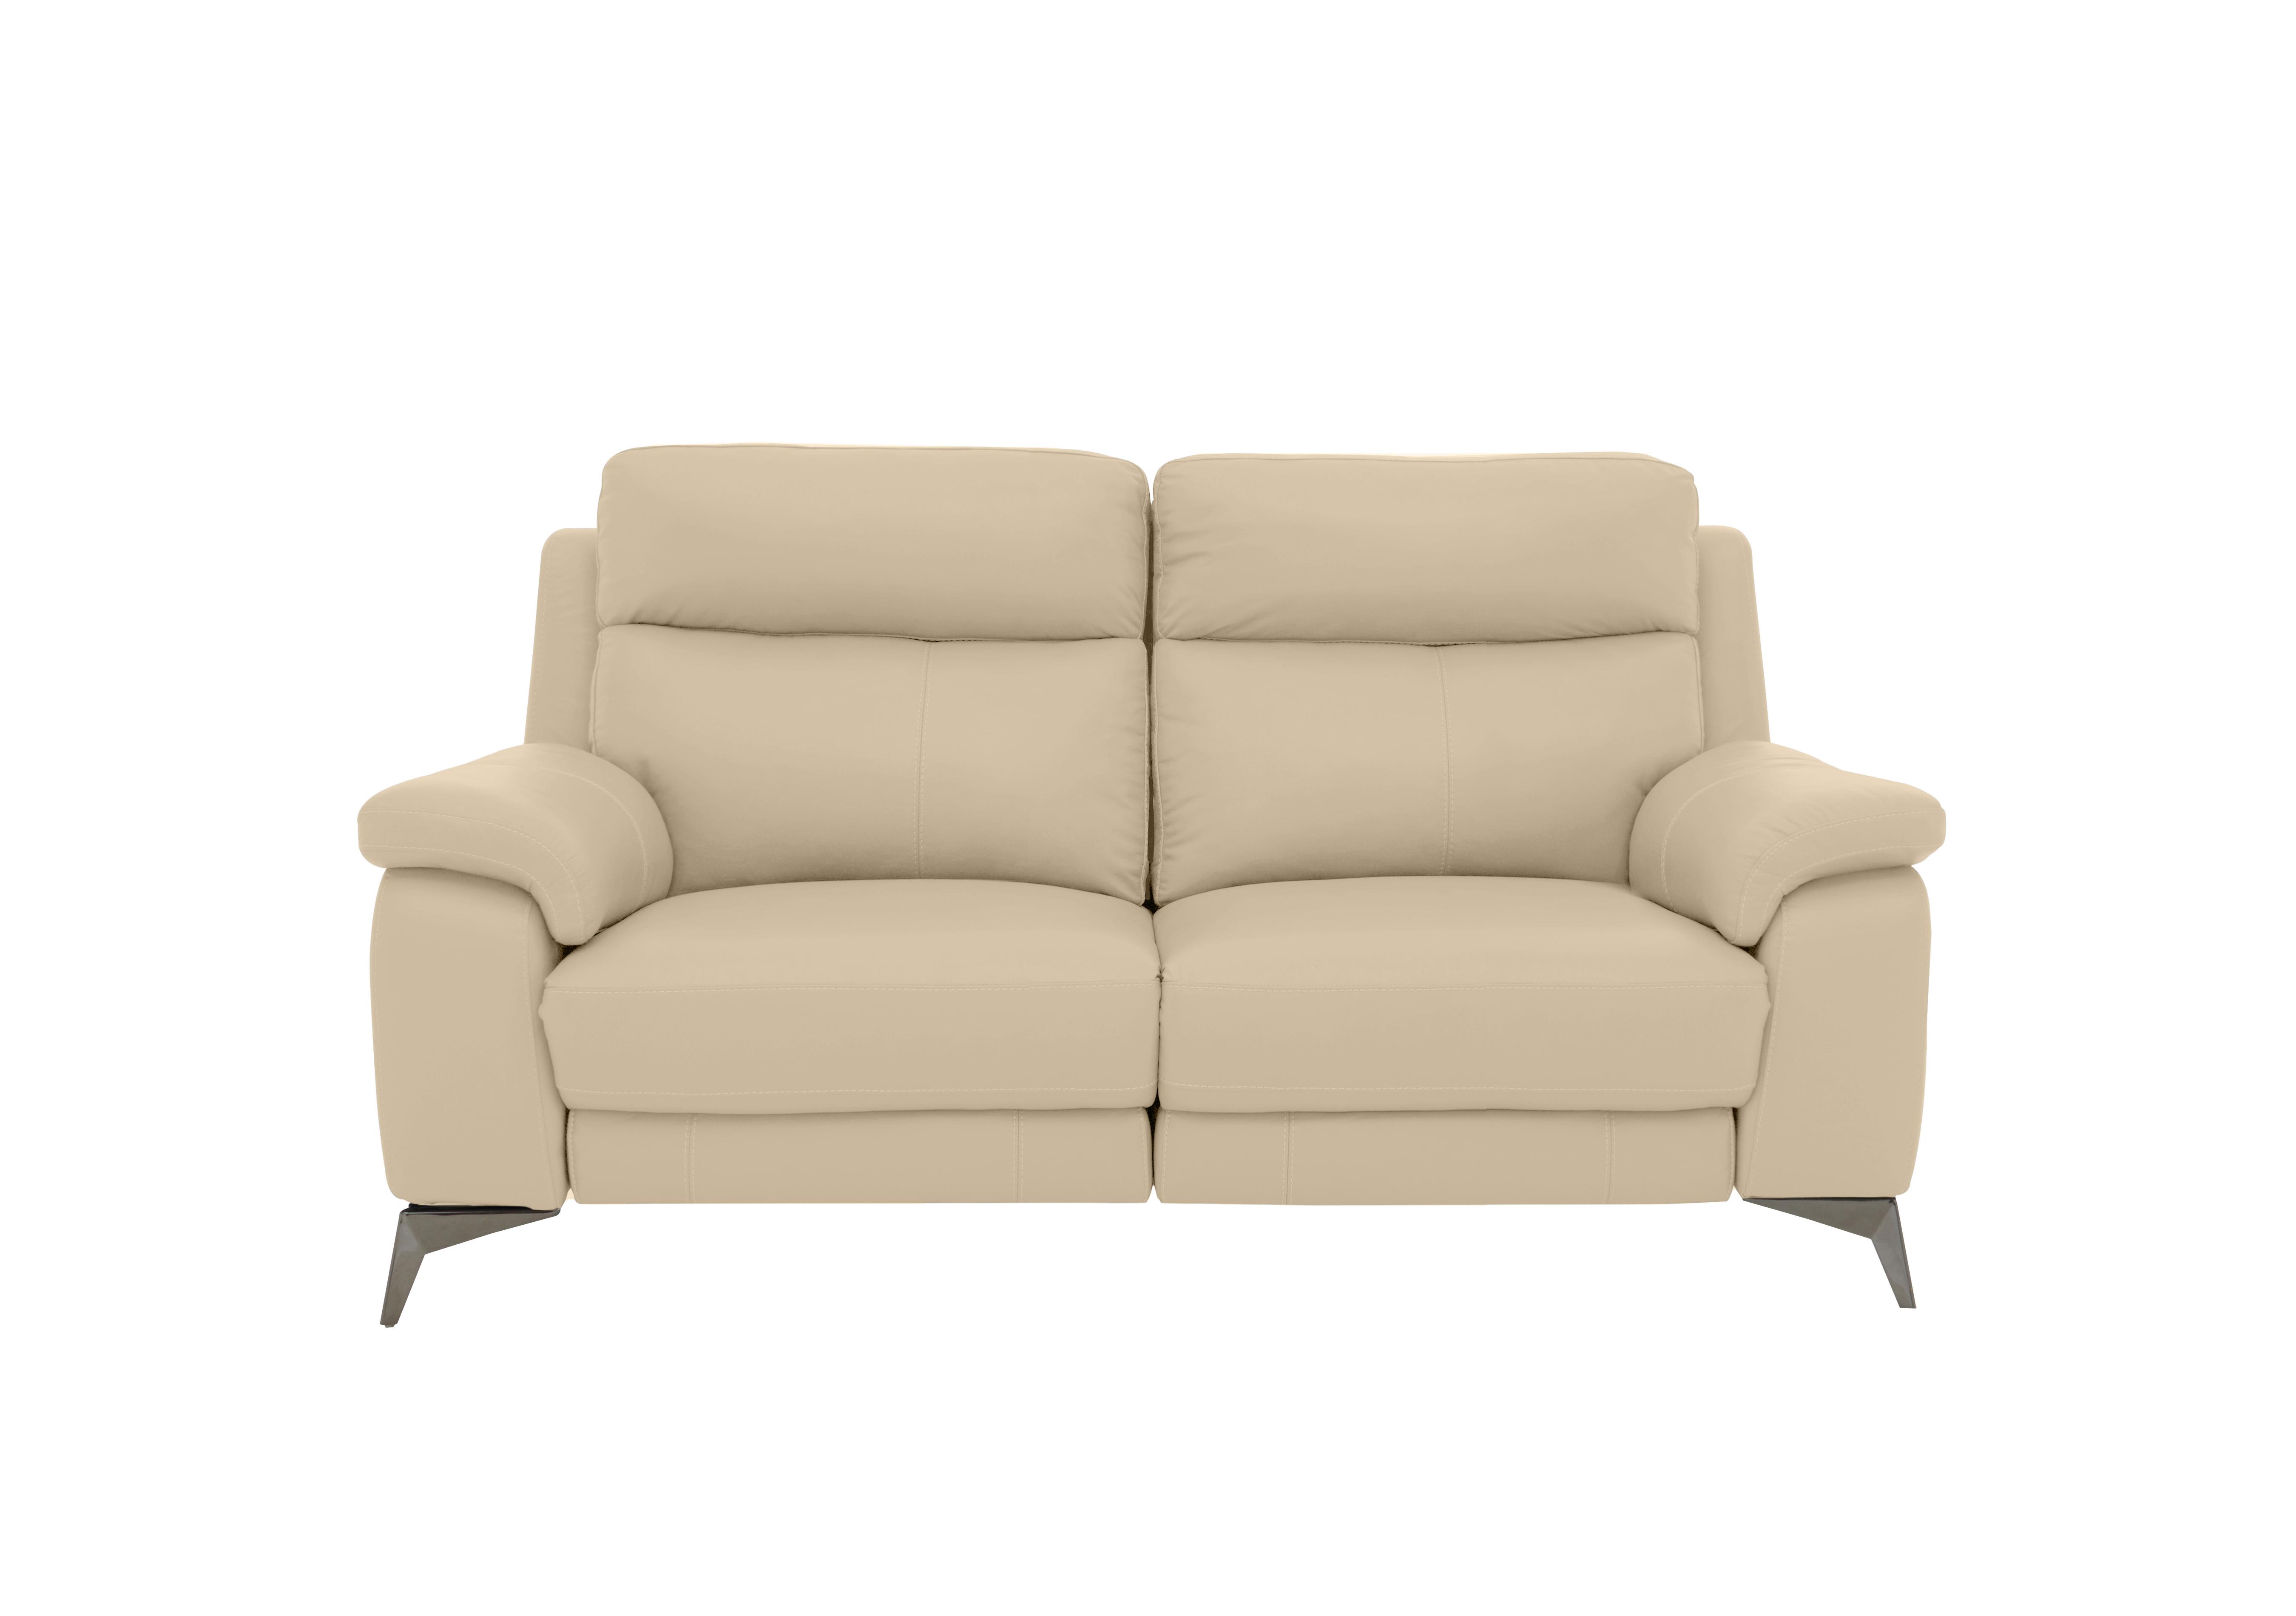 Missouri 2 Seater Leather Sofa in Bv-862c Bisque on Furniture Village